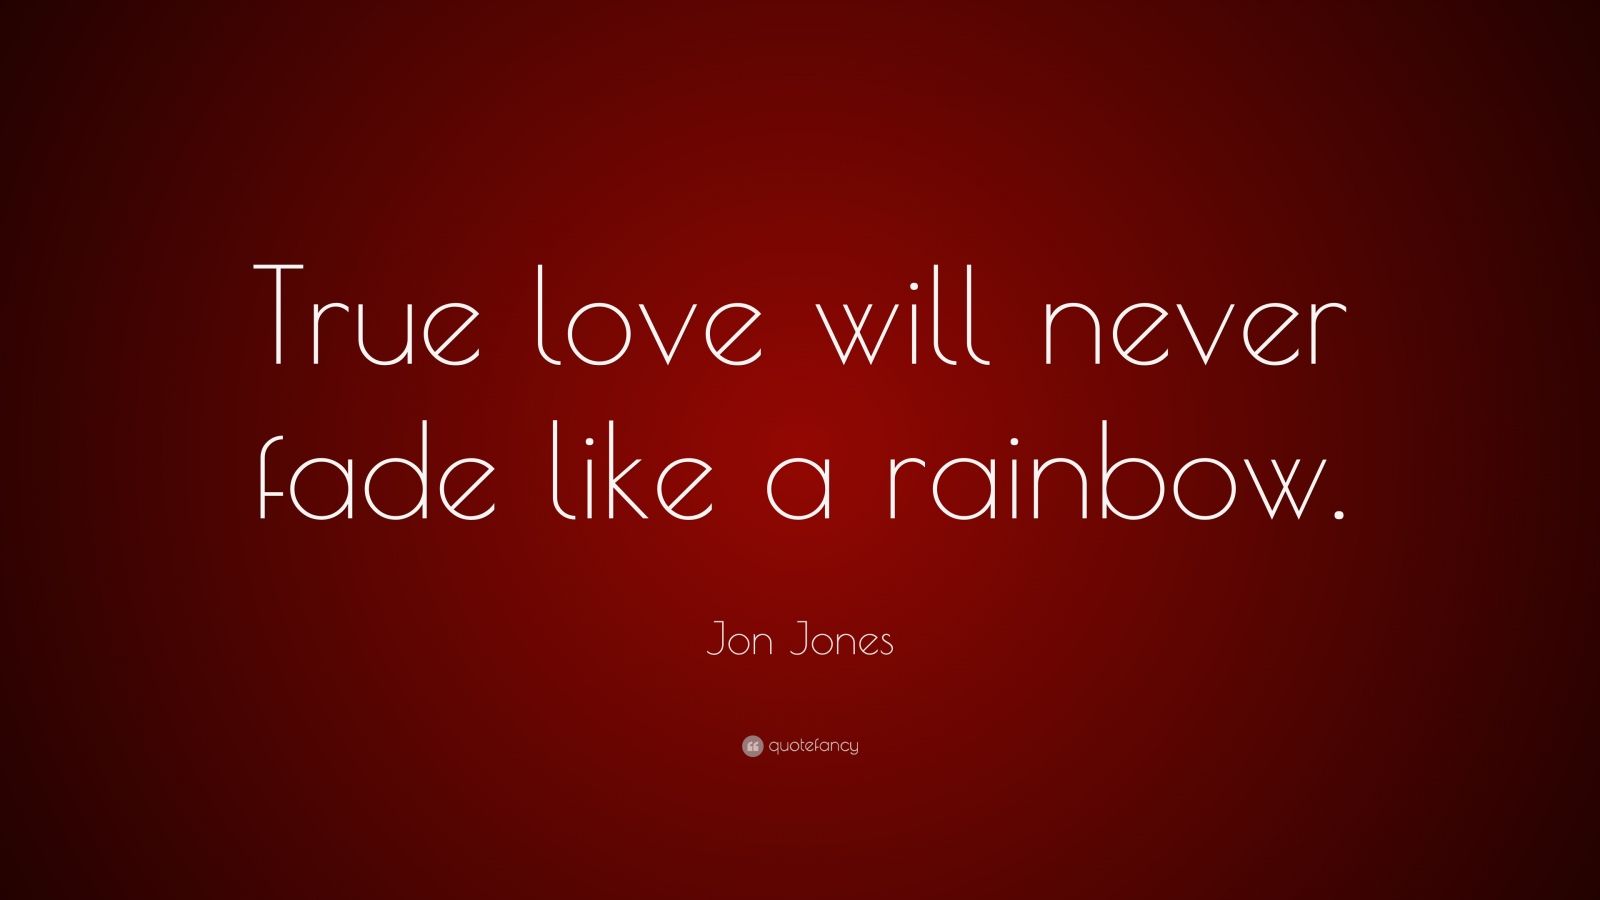 Jon Jones Quote “True love will never fade like a rainbow ”